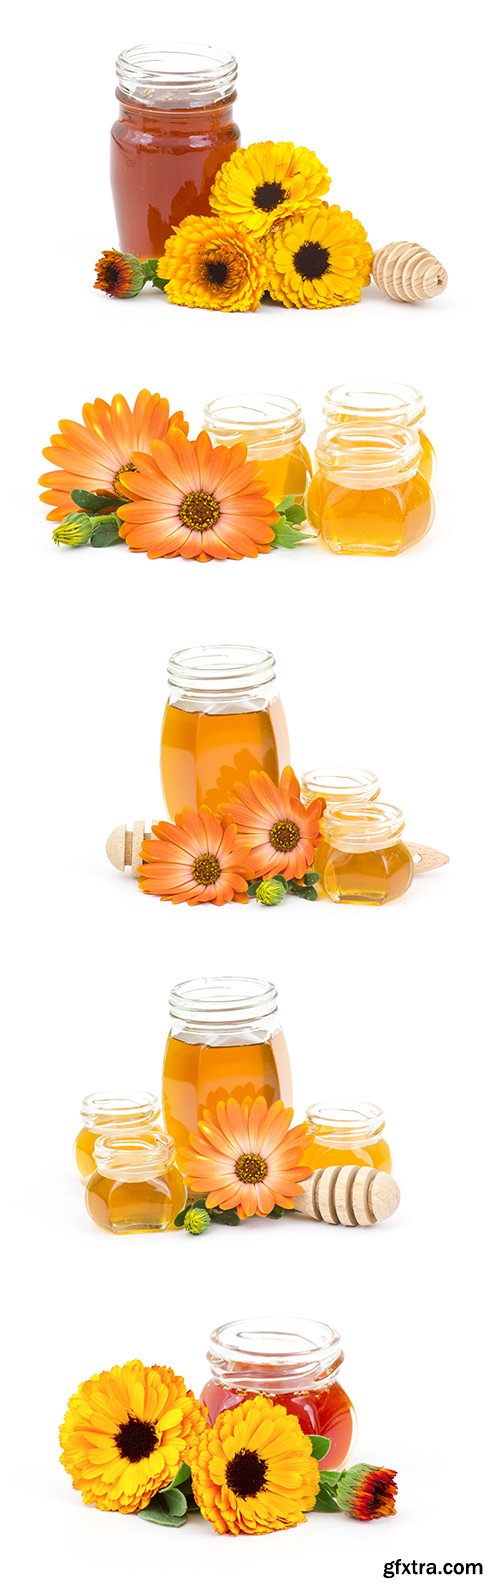 Honey And Calendula Flowers Isolated - 15xJPGs